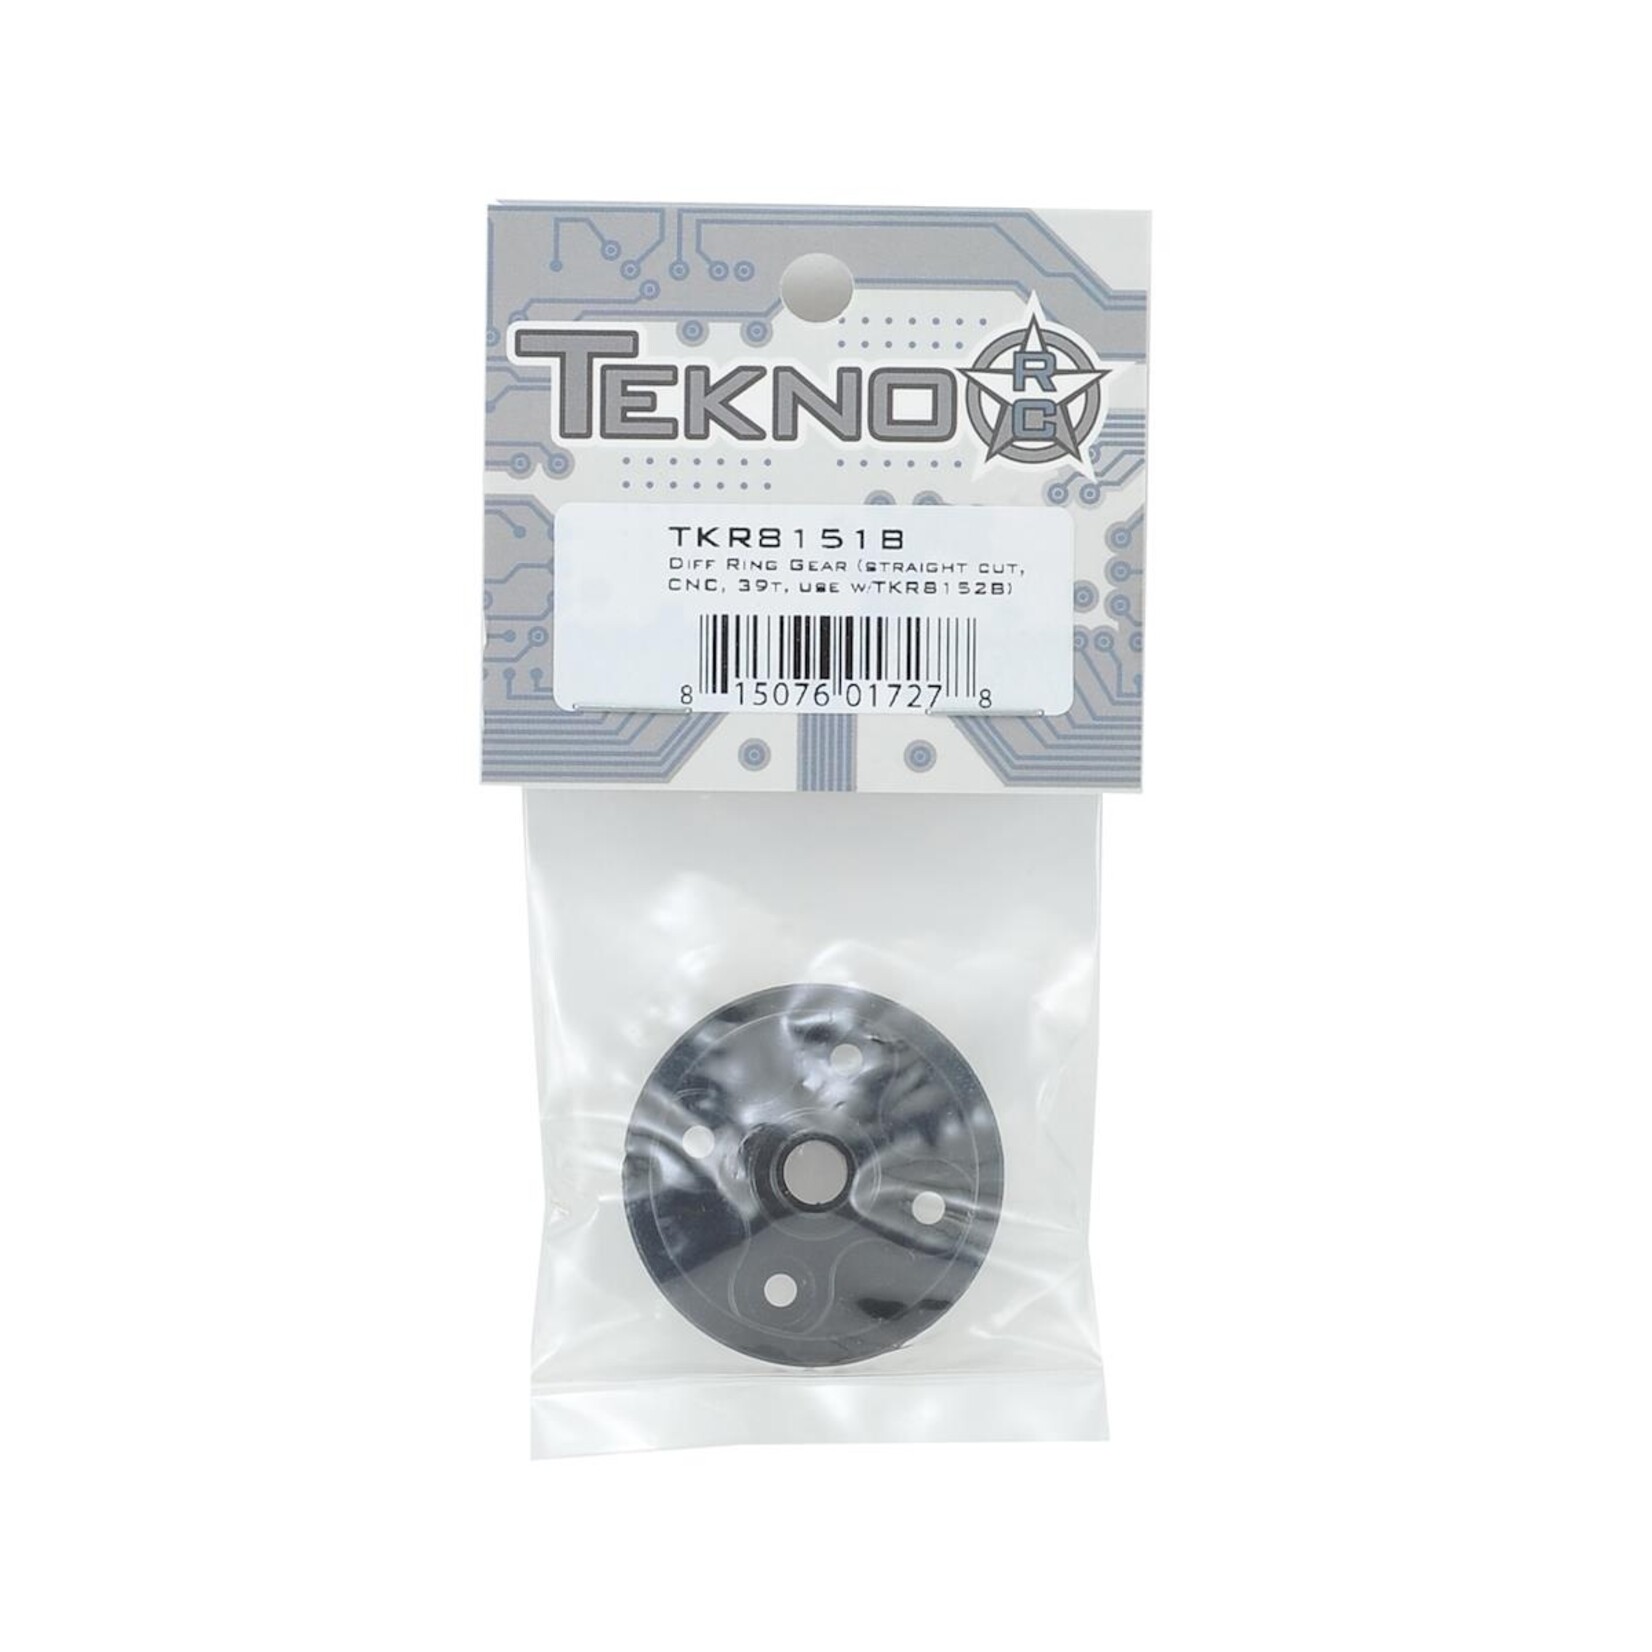 Tekno RC Tekno RC NB48.4 Straight Cut Differential Ring Gear (39T) #TKR8151B